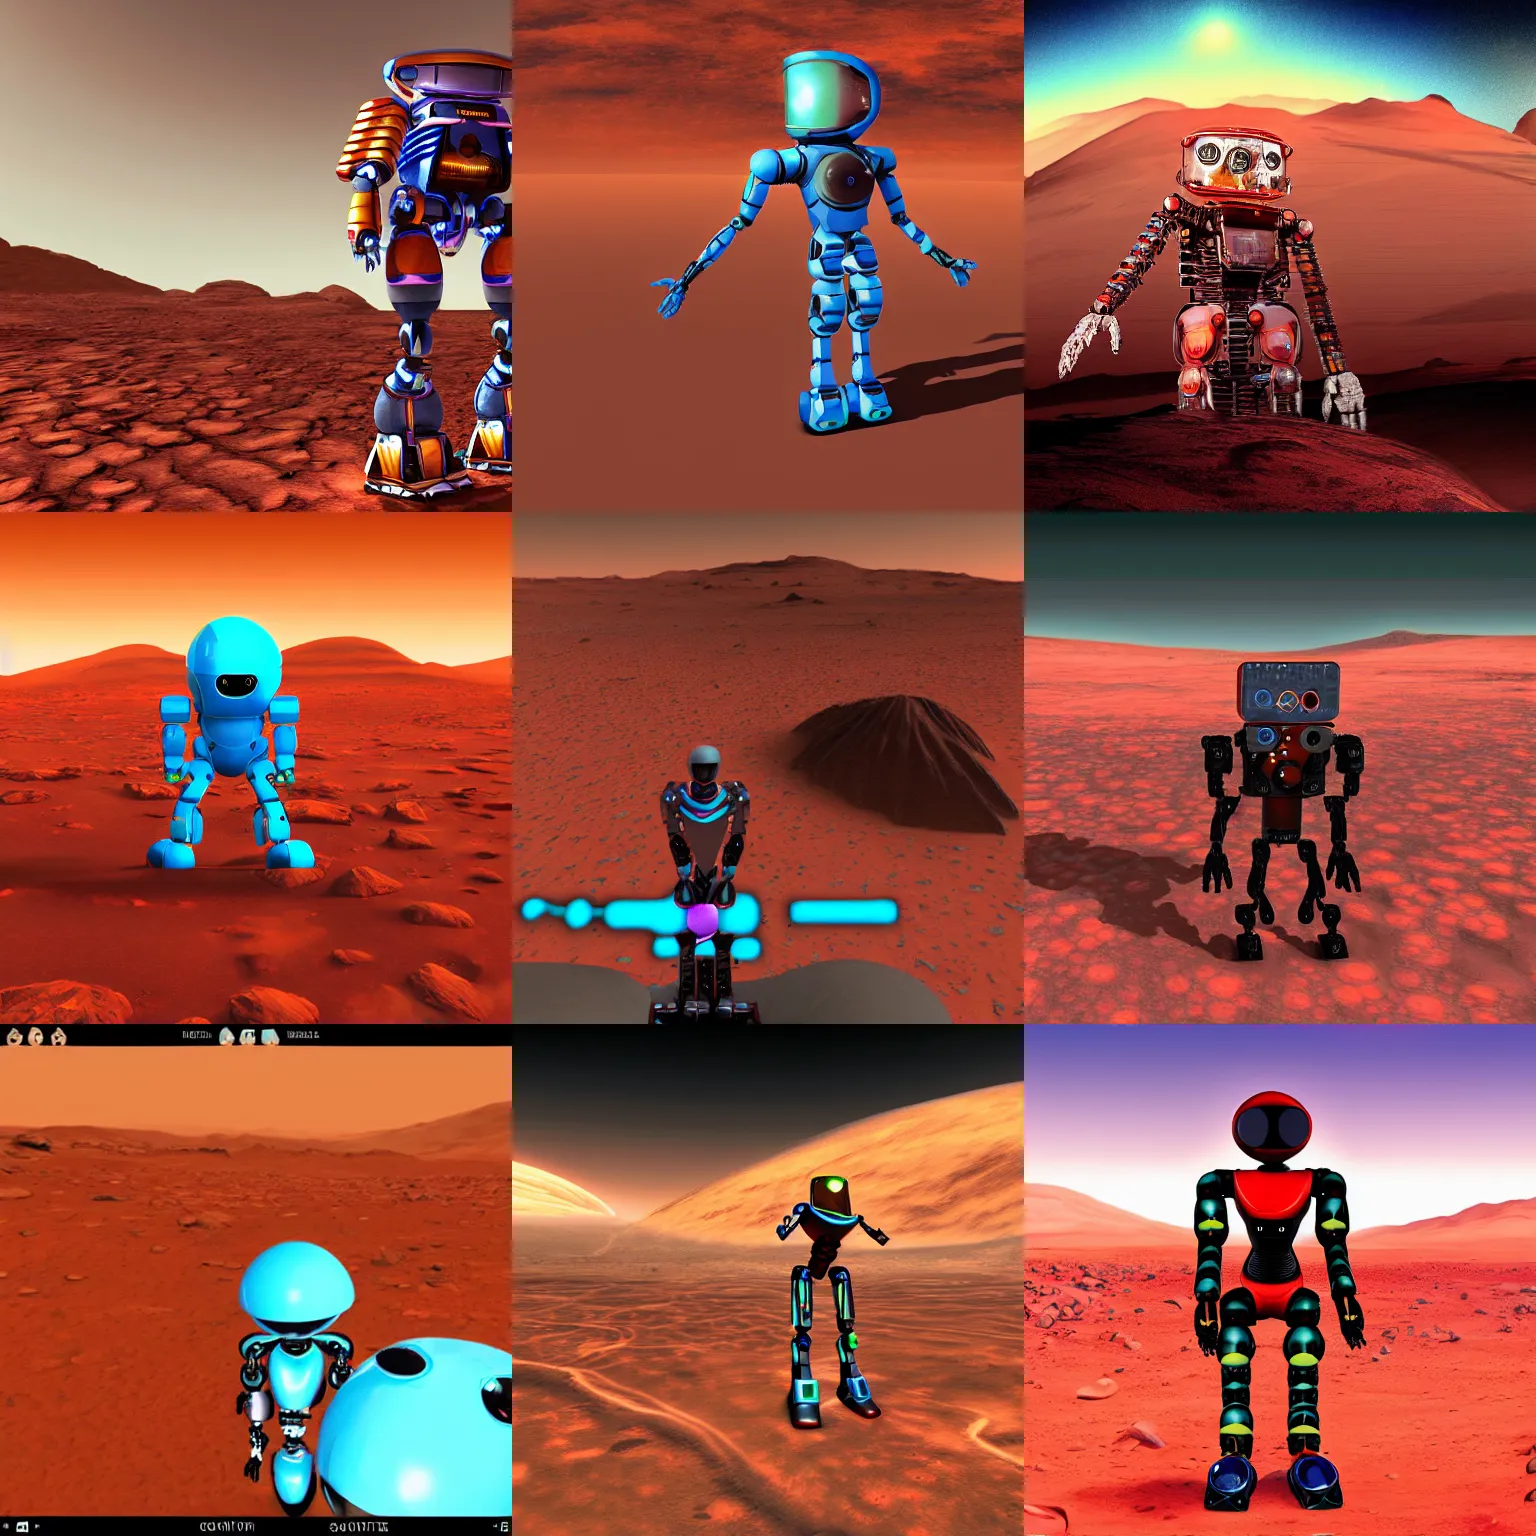 Prompt: humanoid robot on mars, videogame screenshot, digital art, vibrant colors, awesome